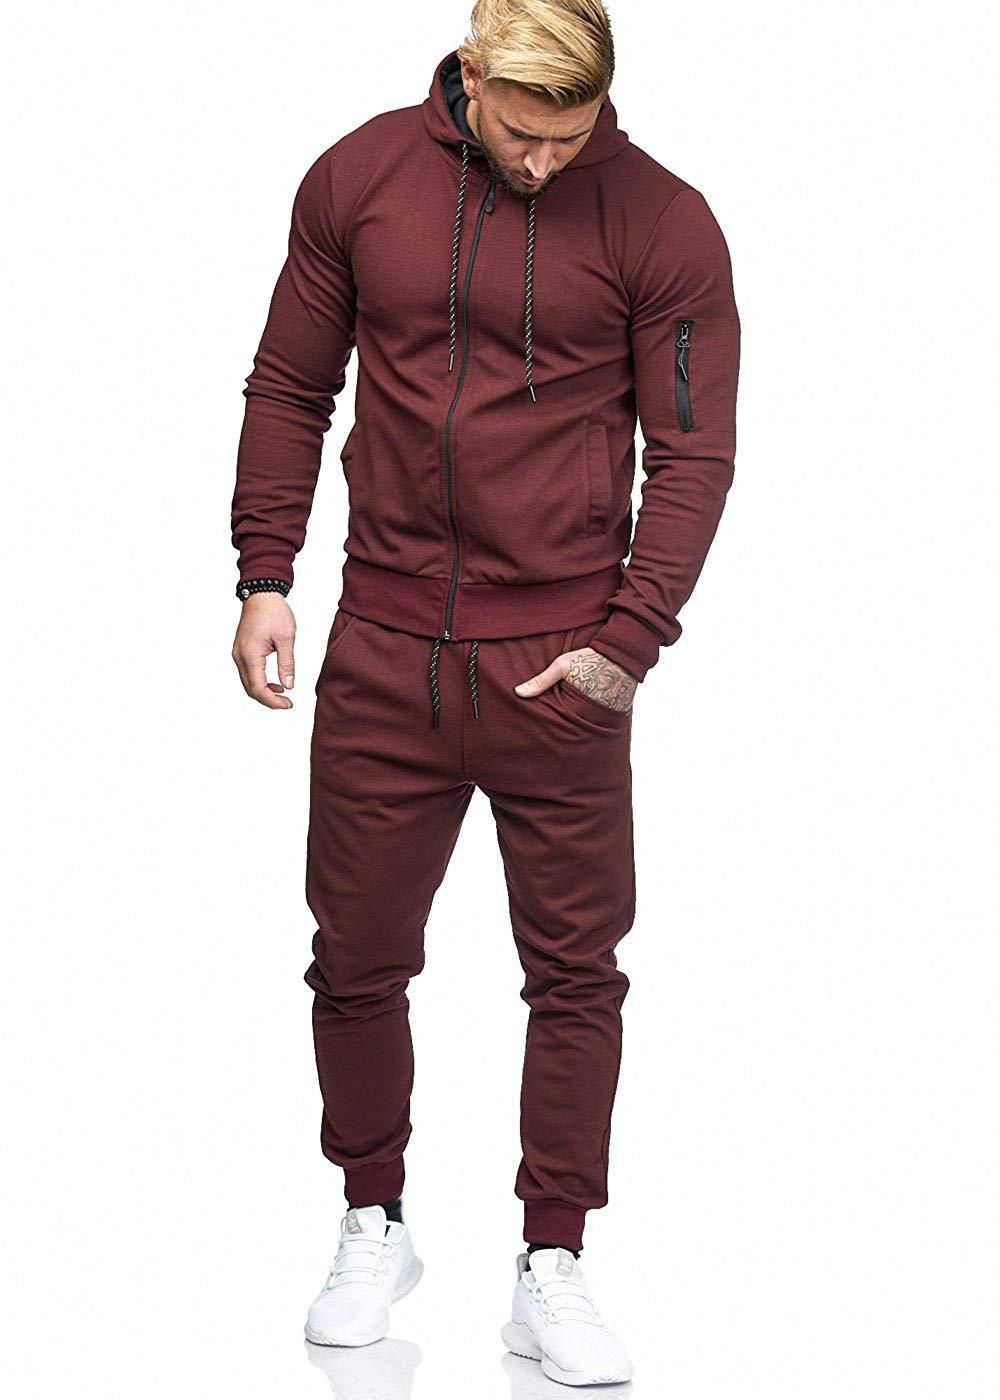 mens designer jogging suits